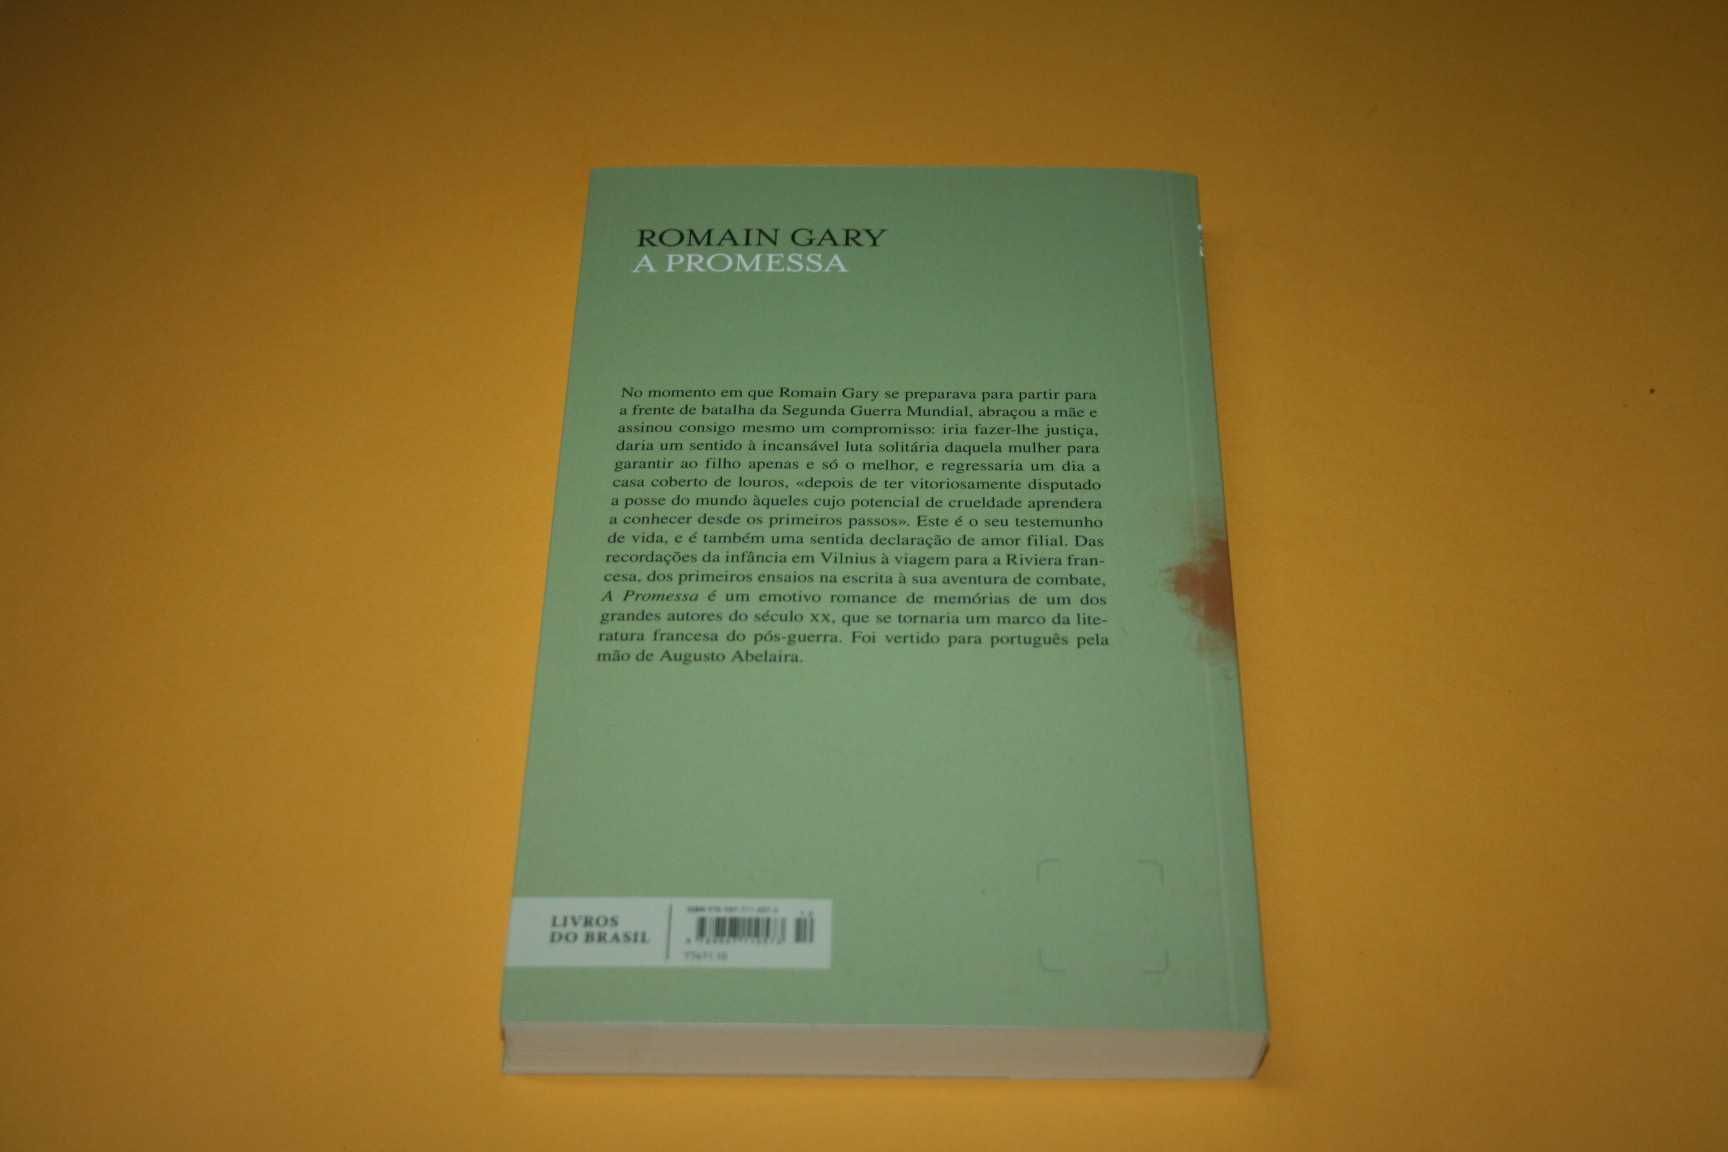 [] A Promessa, Romain Gary